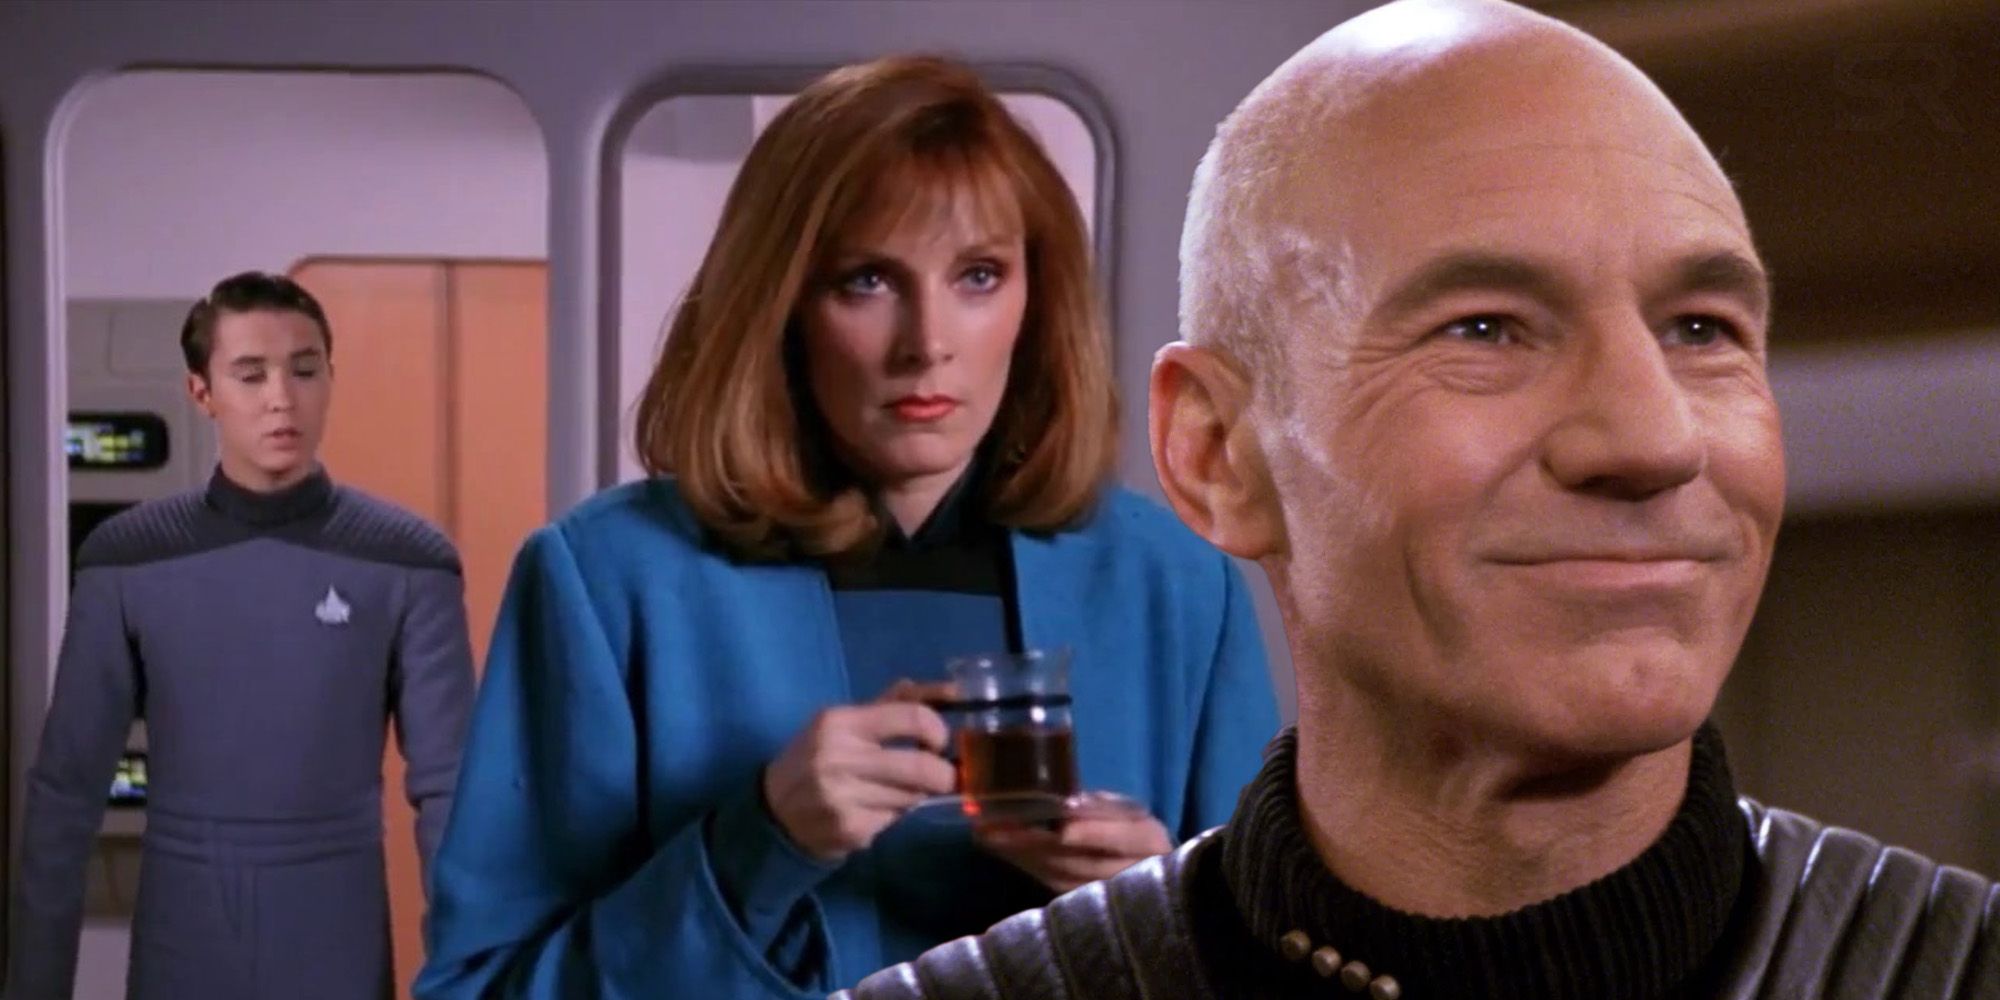 Picard Beverly crusher star trek the next generation